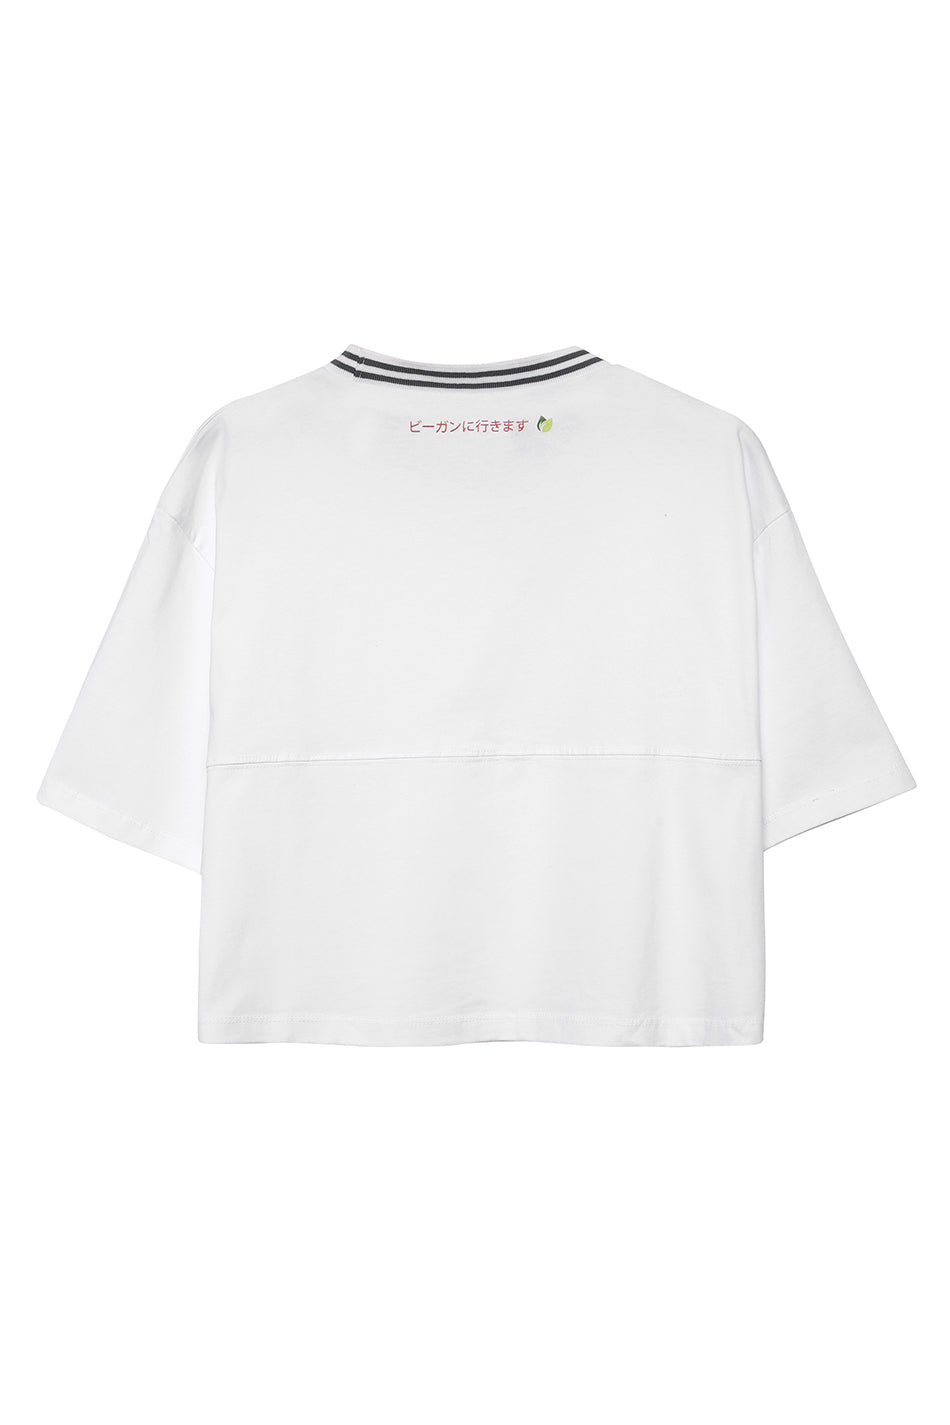 GO VEGAN - Oversize T-Shirt